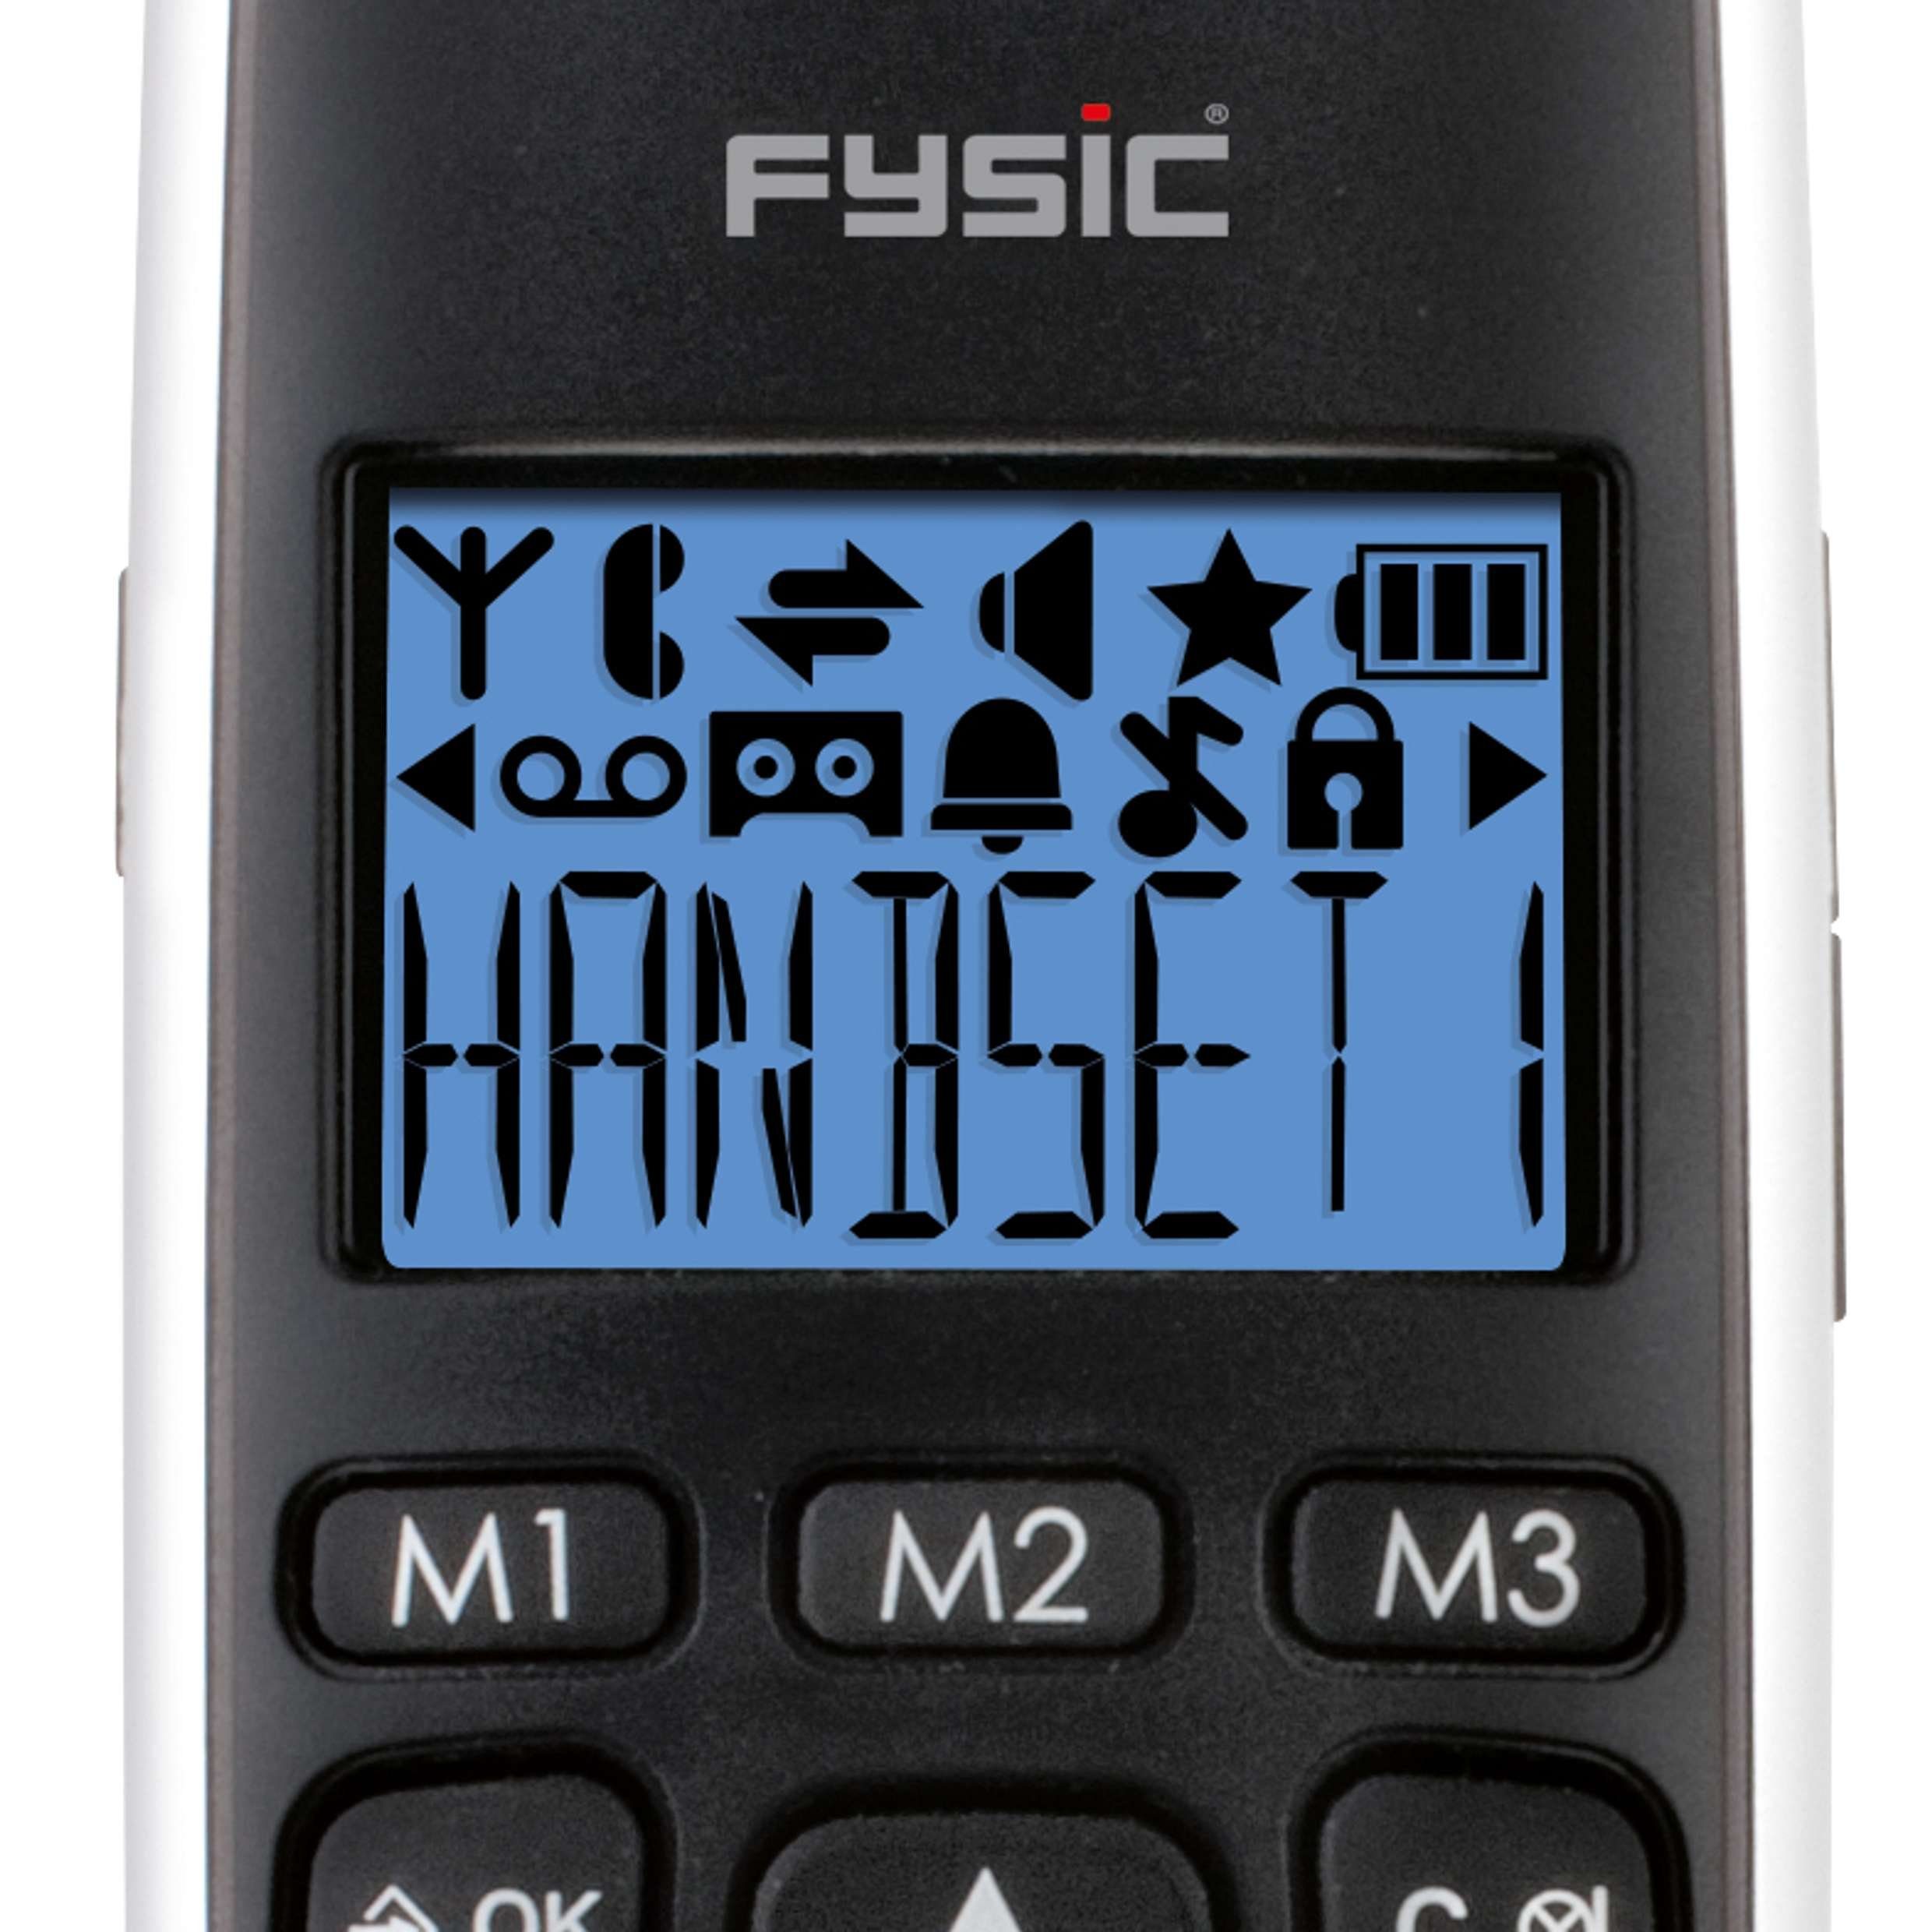 Tasten, (Mobilteile: 2, Hörgerätkompatibel, DECT-Telefon FX-6020 Display) Schnurloses großes Fysic große